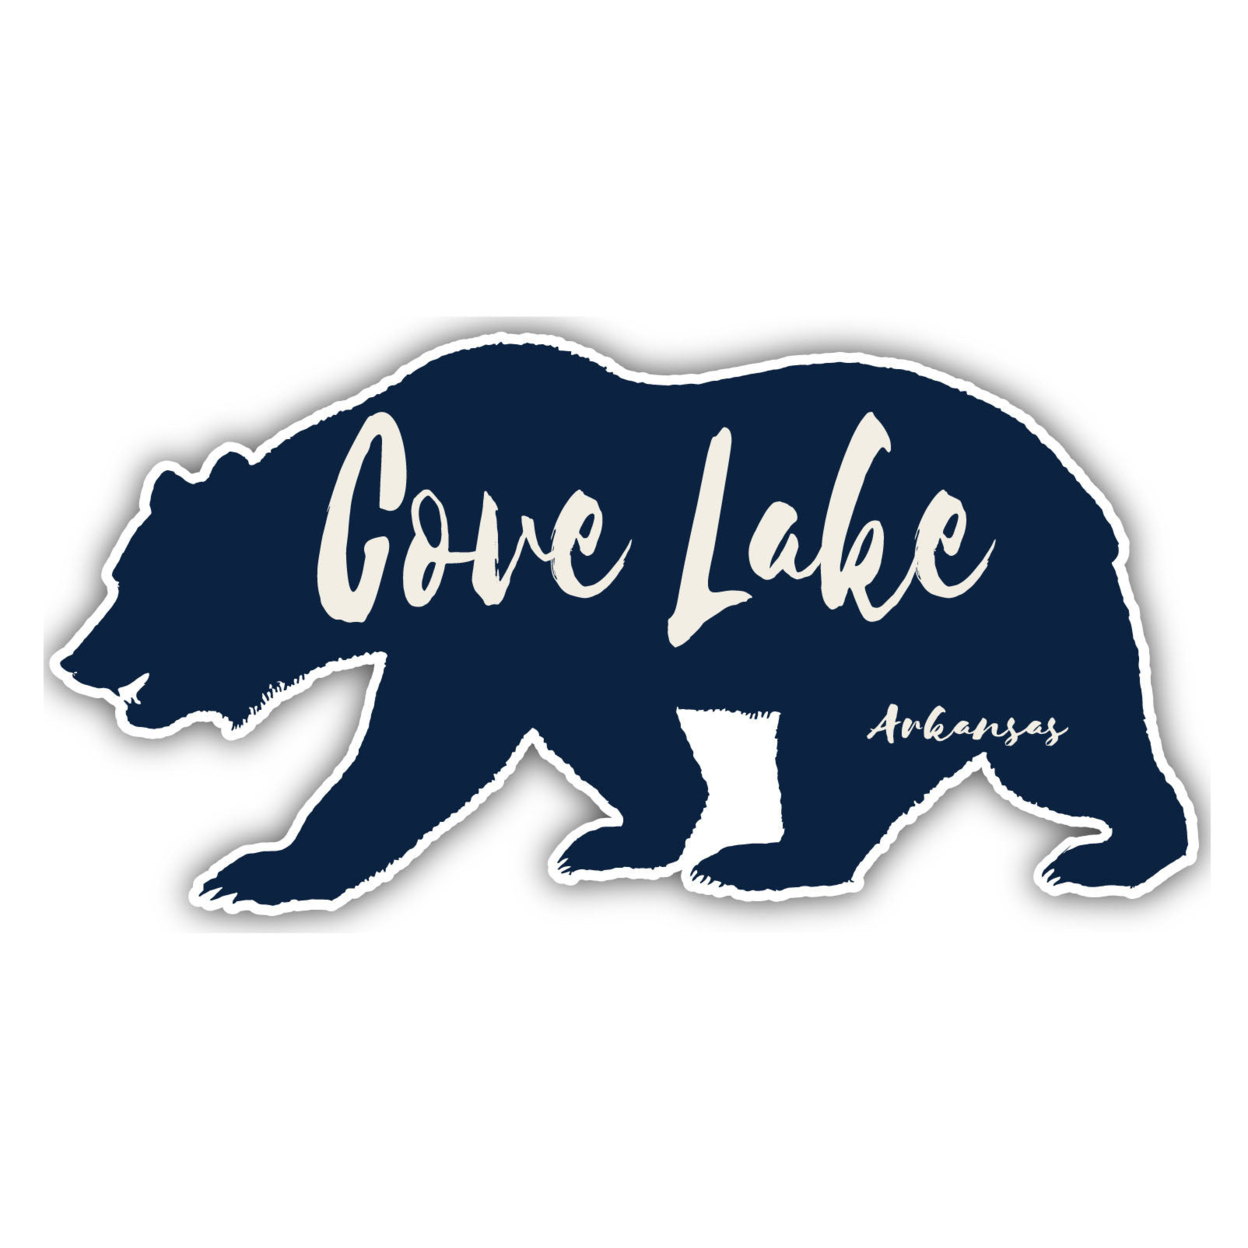 Cove Lake Arkansas Souvenir Decorative Stickers (Choose Theme And Size) - 4-Pack, 12-Inch, Bear